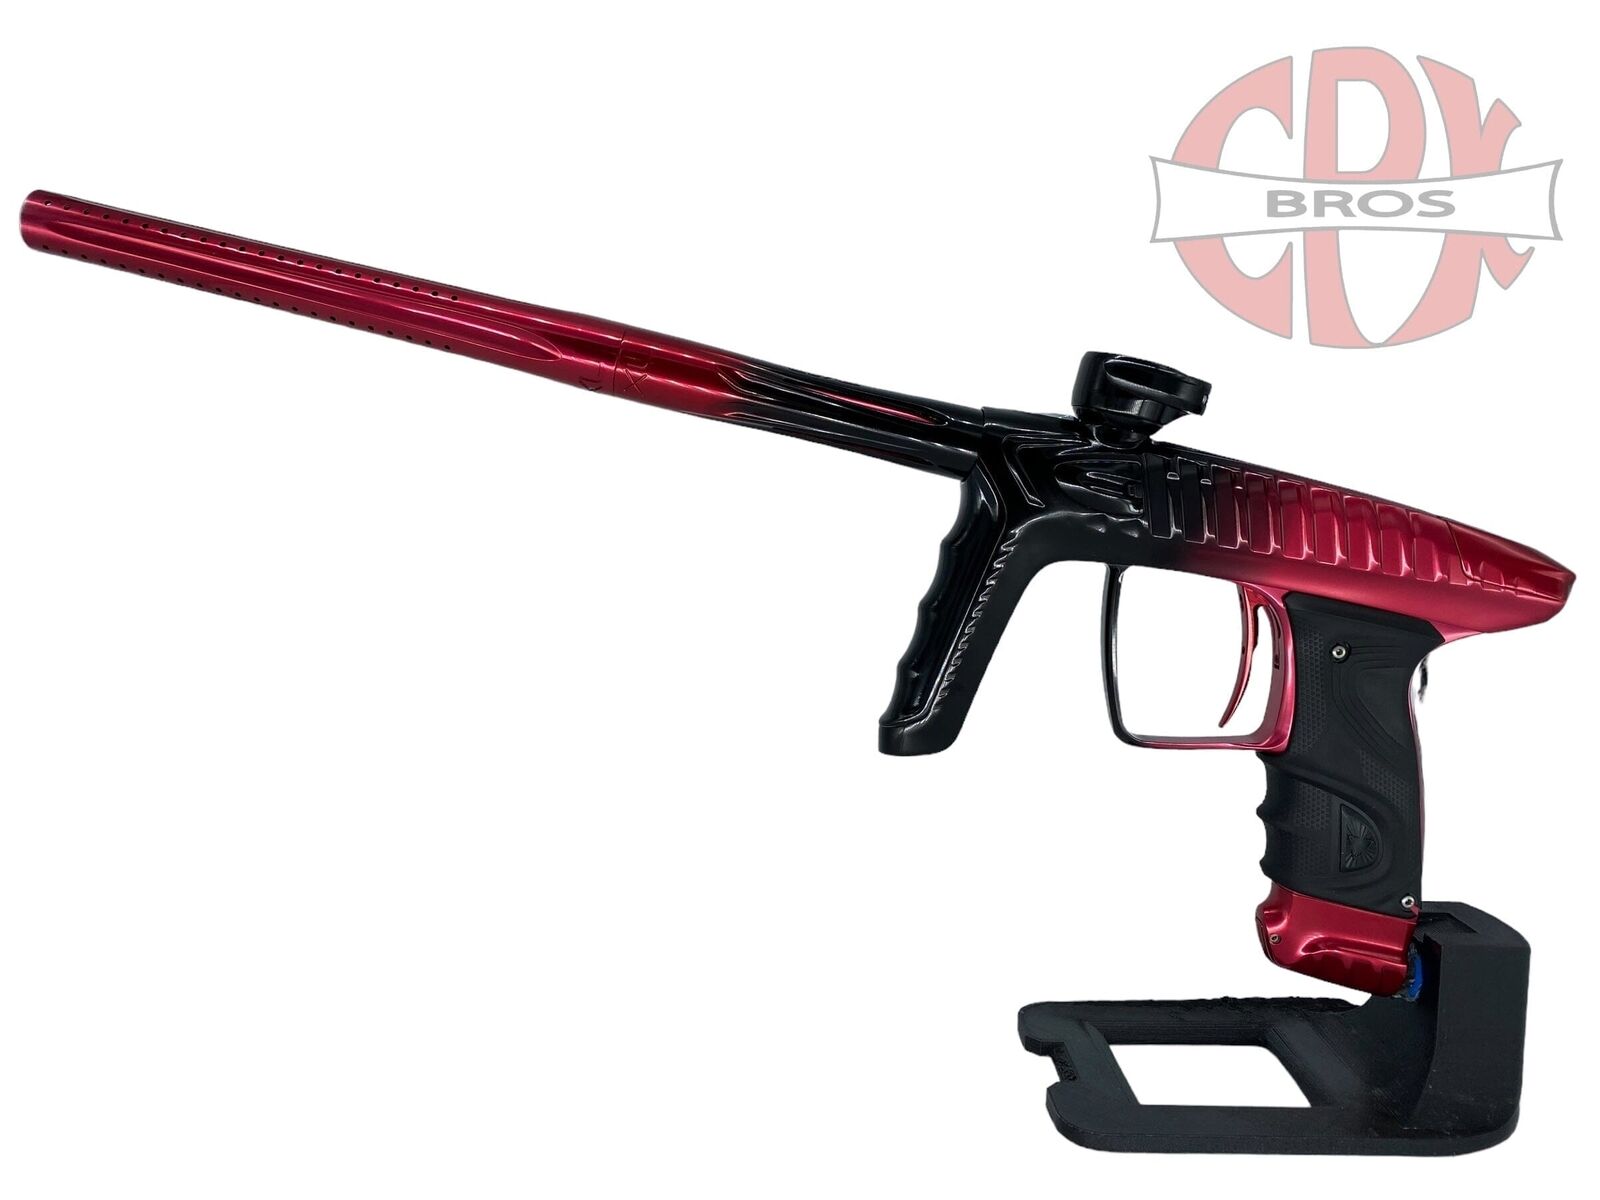 Project Luxe Tm40 Paintball Gun